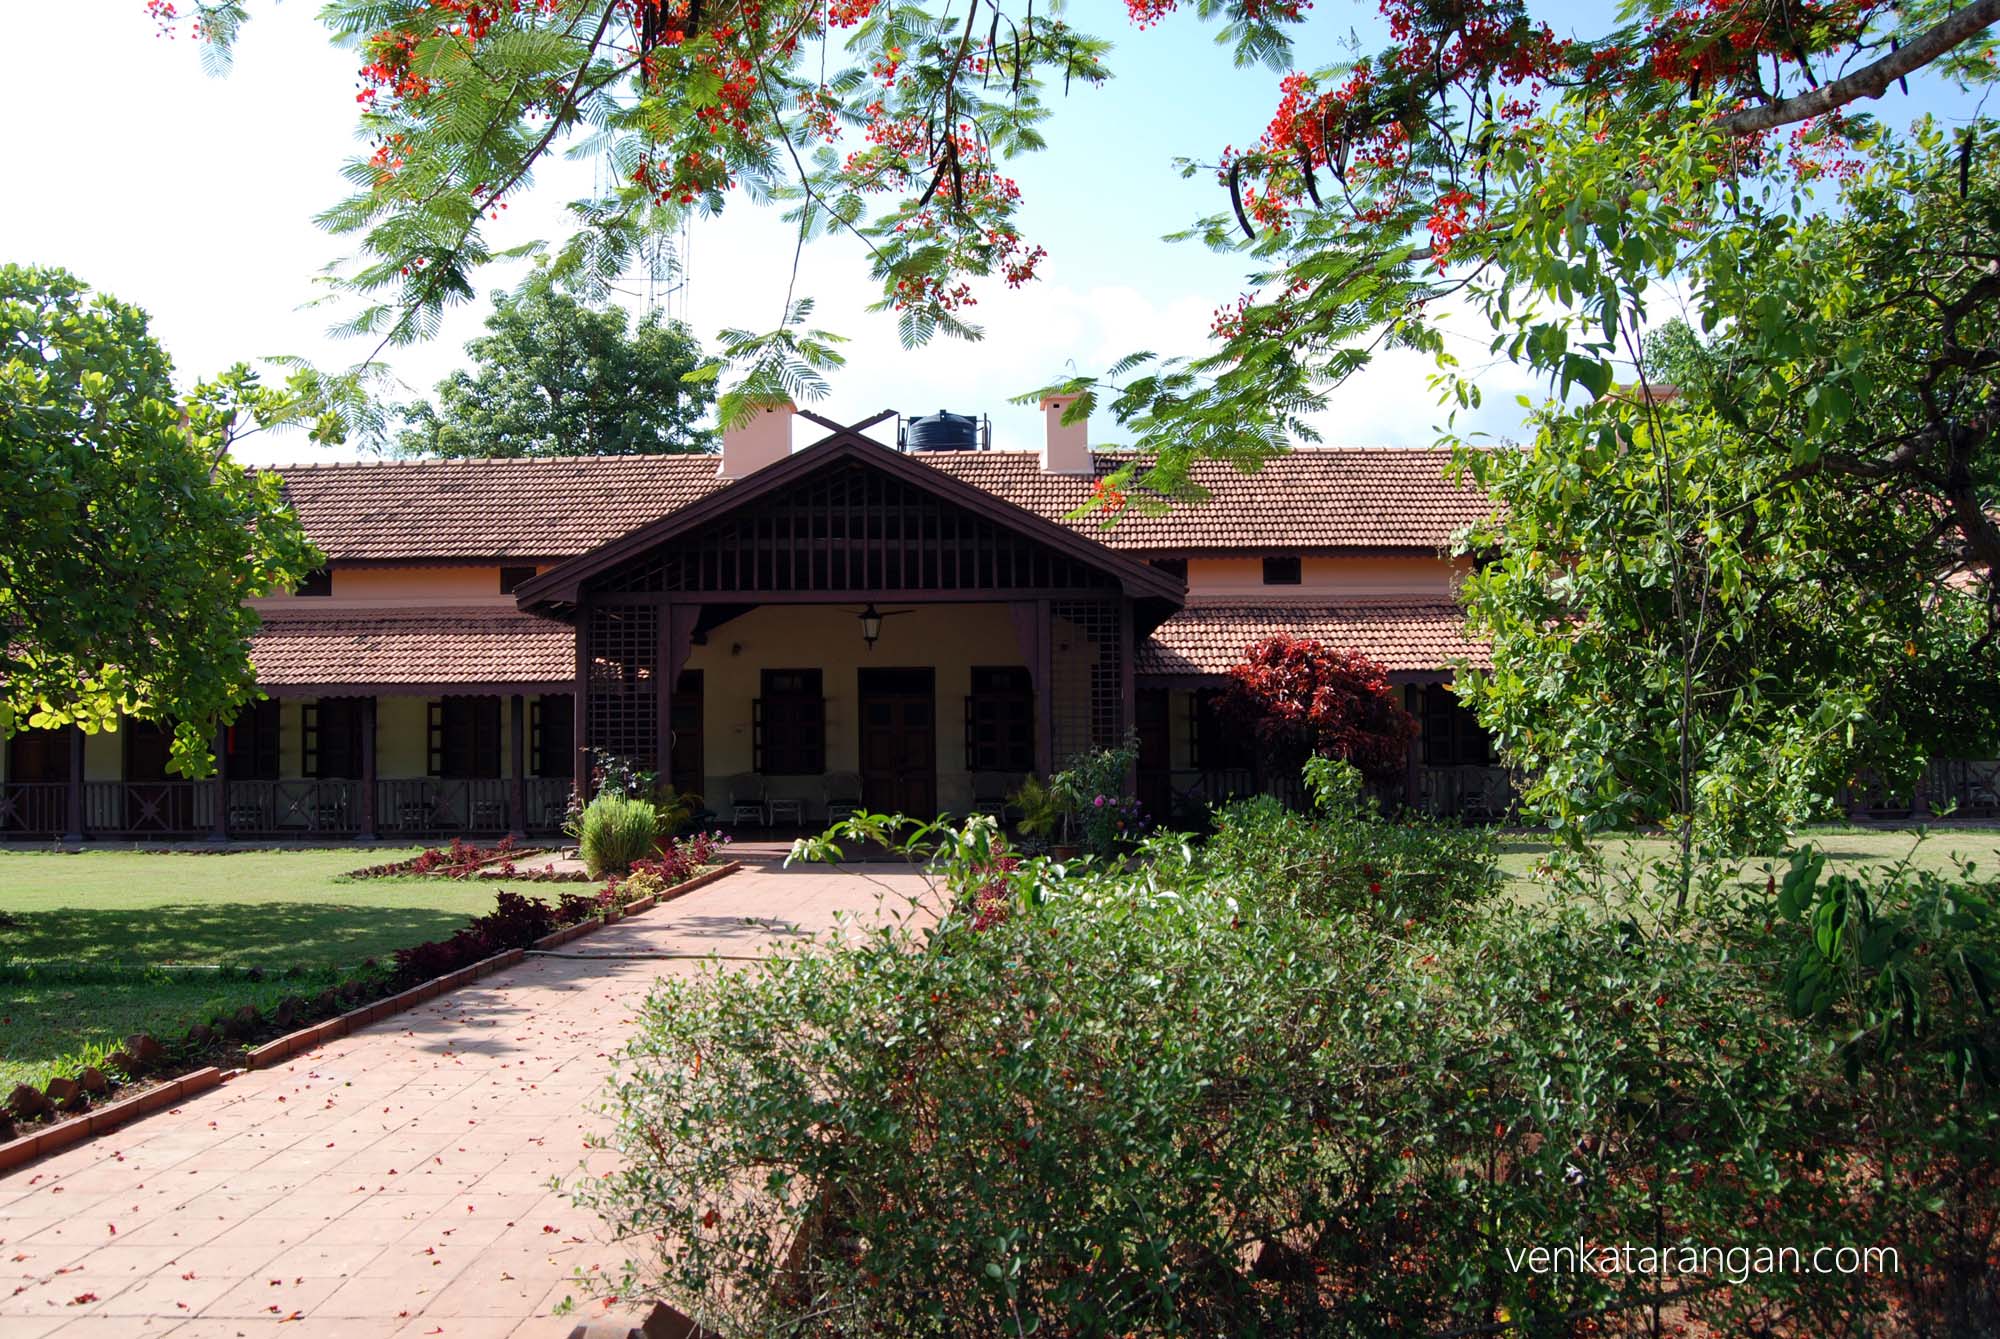 Kabini River Lodge